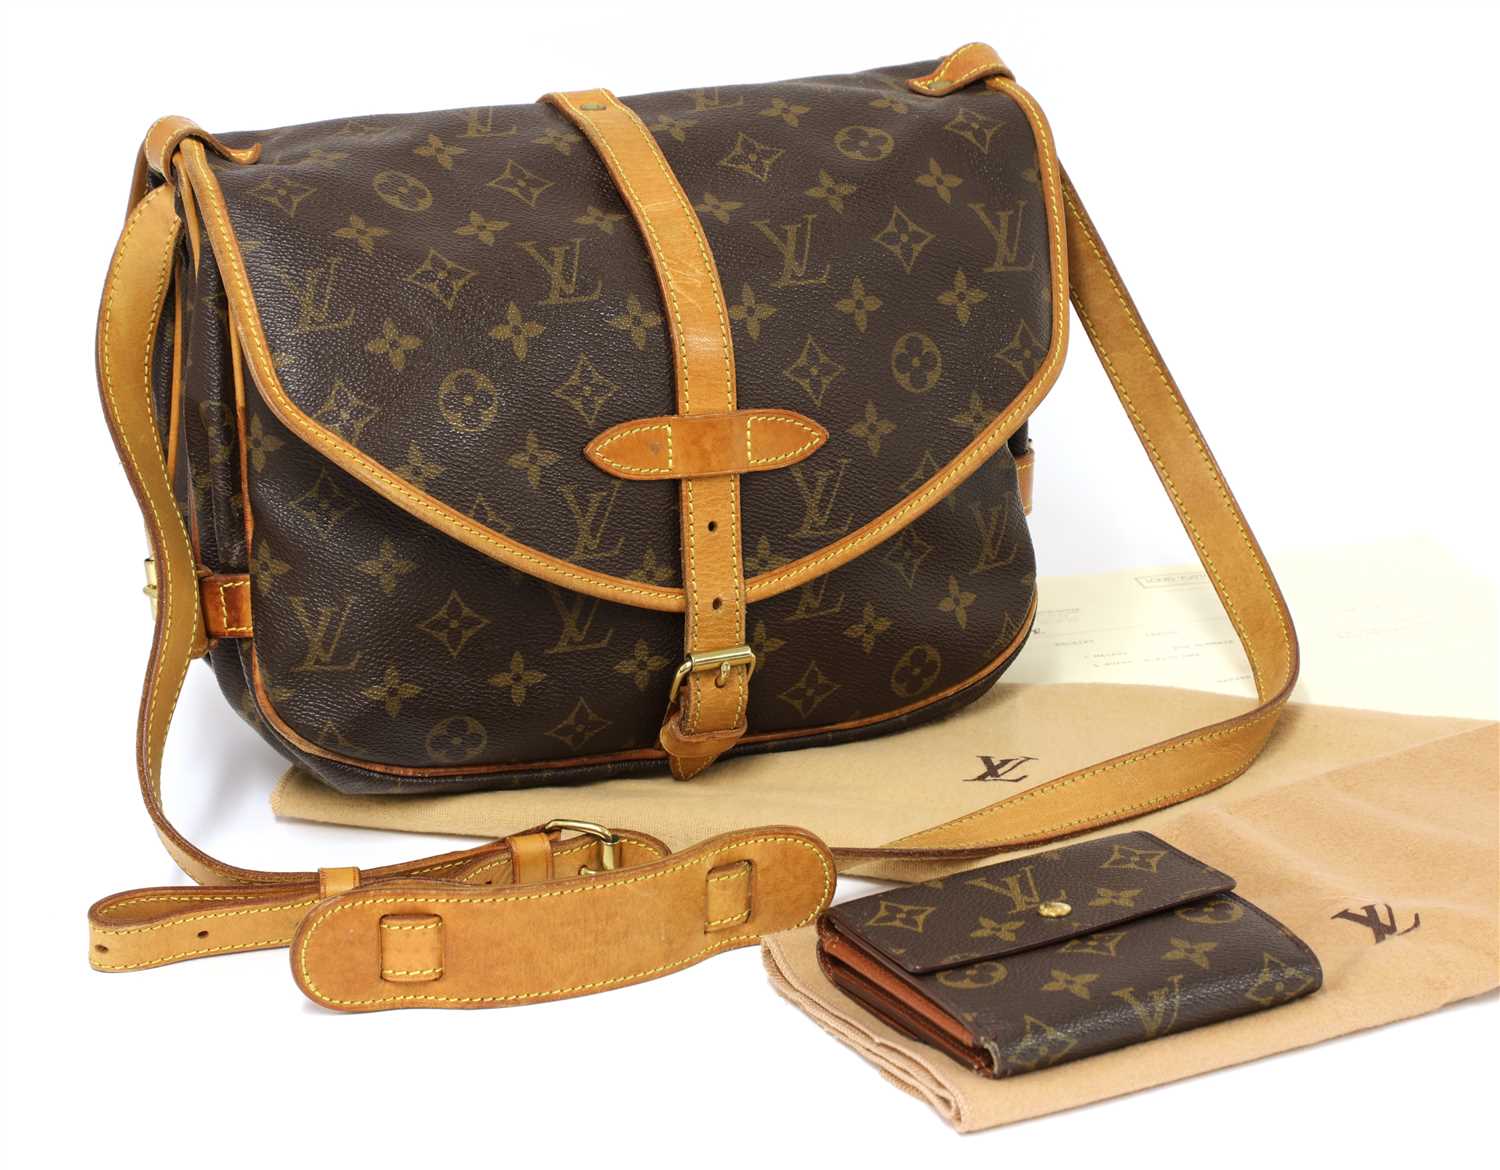 Sold at Auction: Louis Vuitton, LOUIS VUITTON Monogrammed Passport